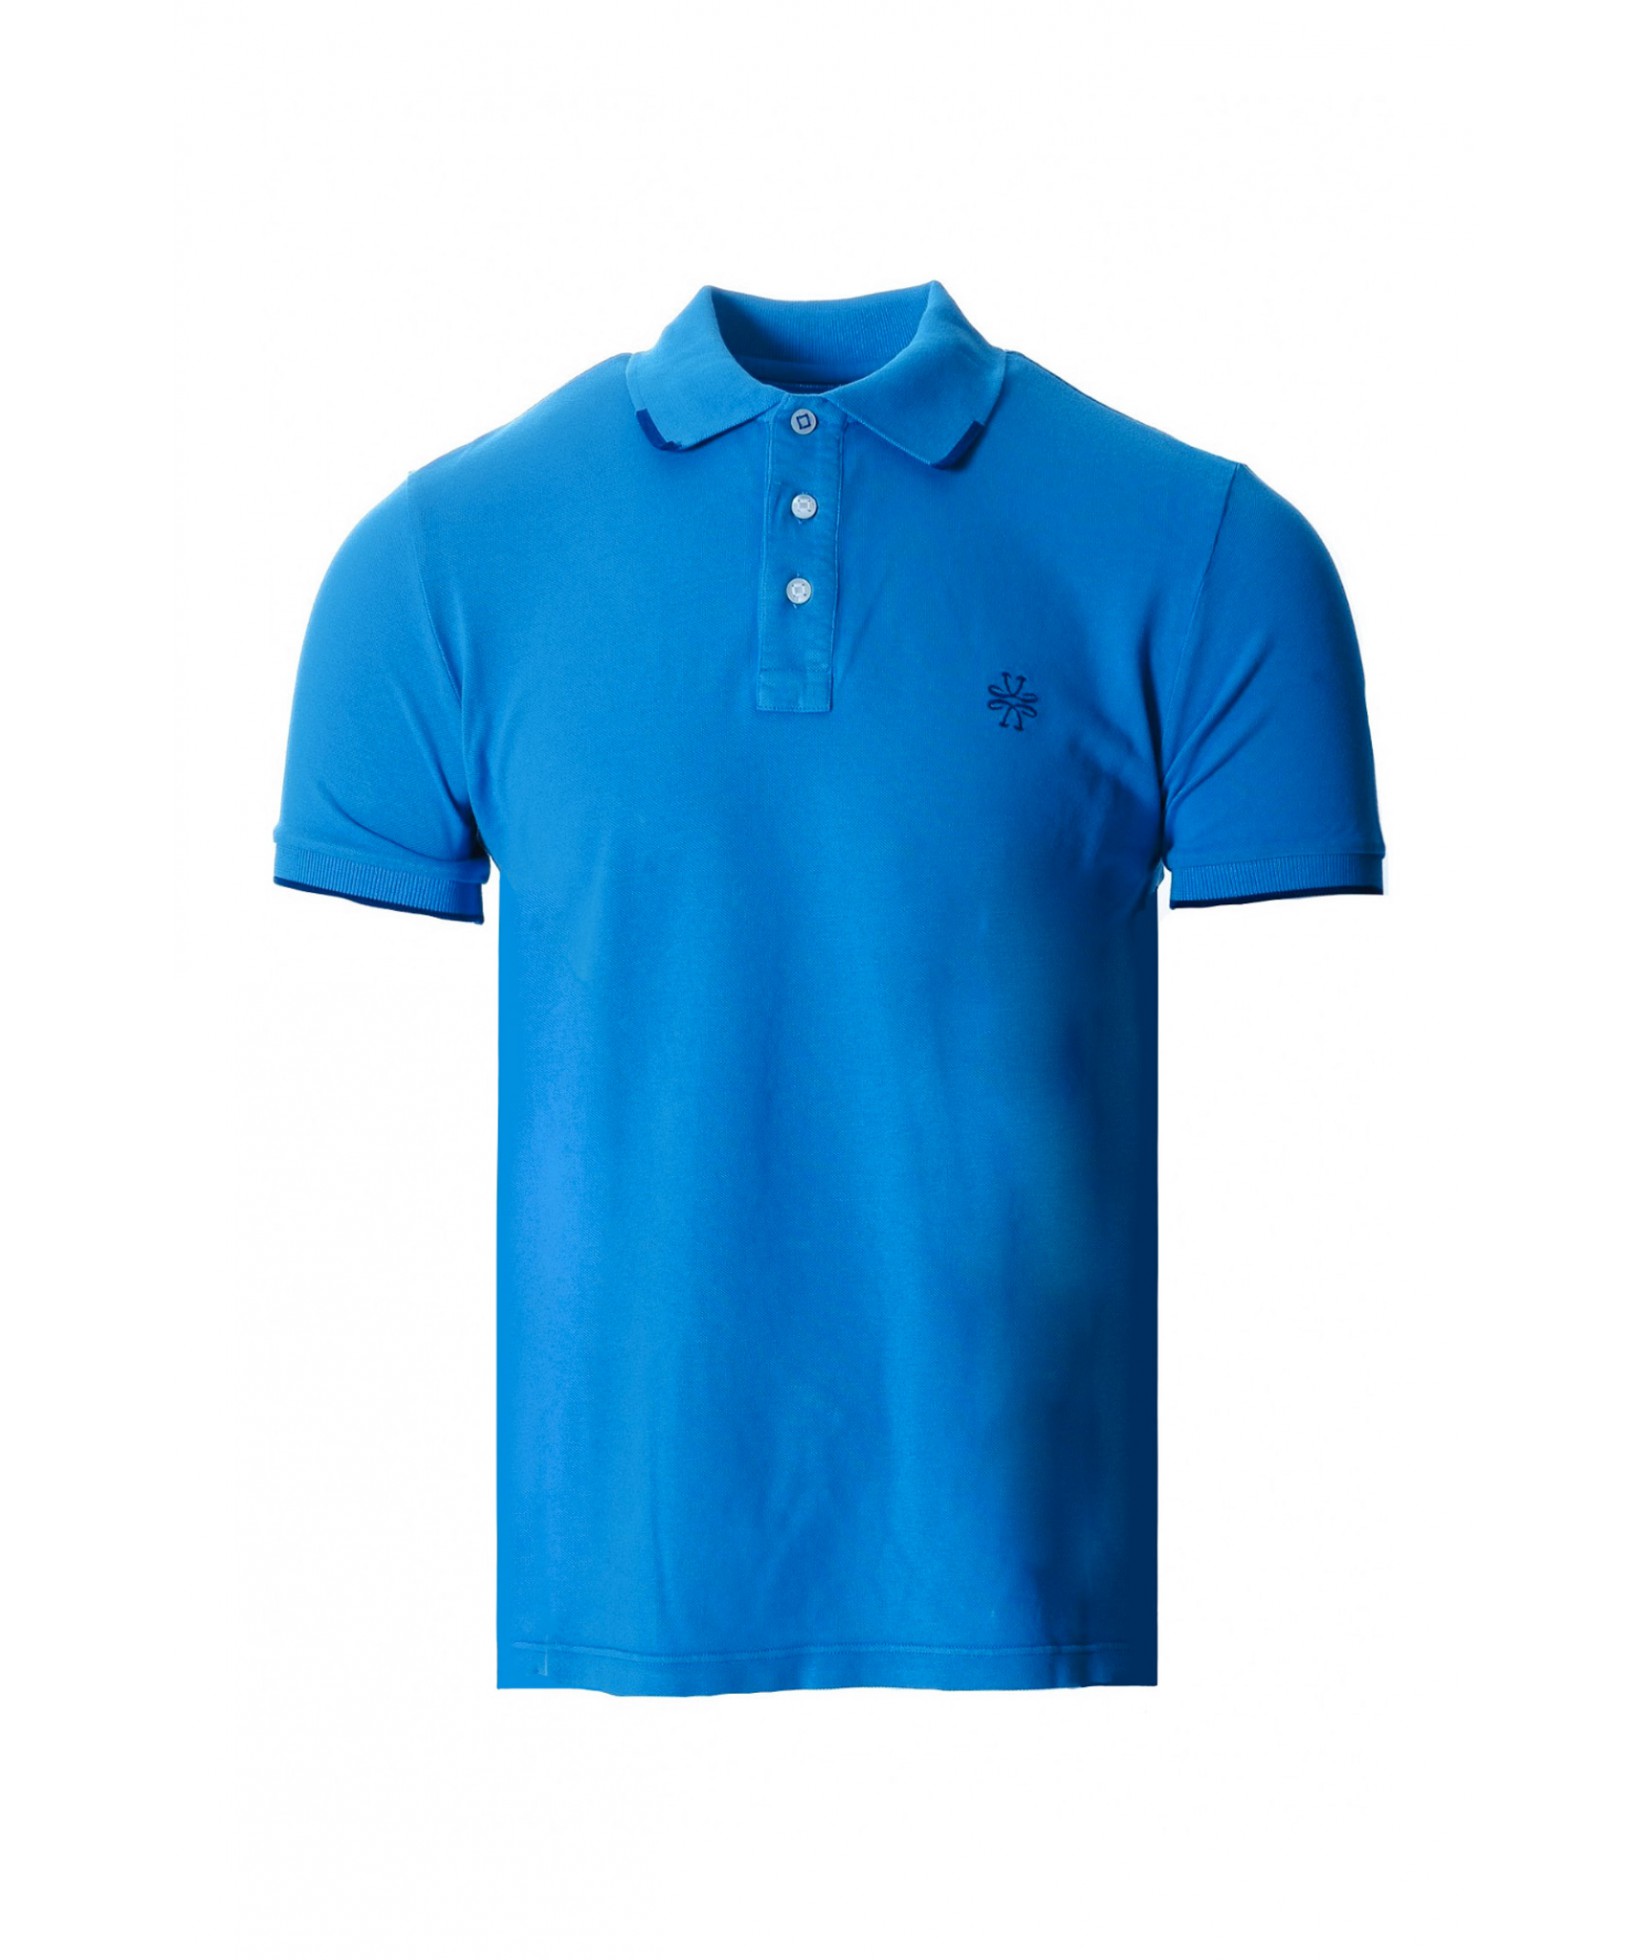 Jacob Cohen Polo shirt blue 2464 X22 (38892)